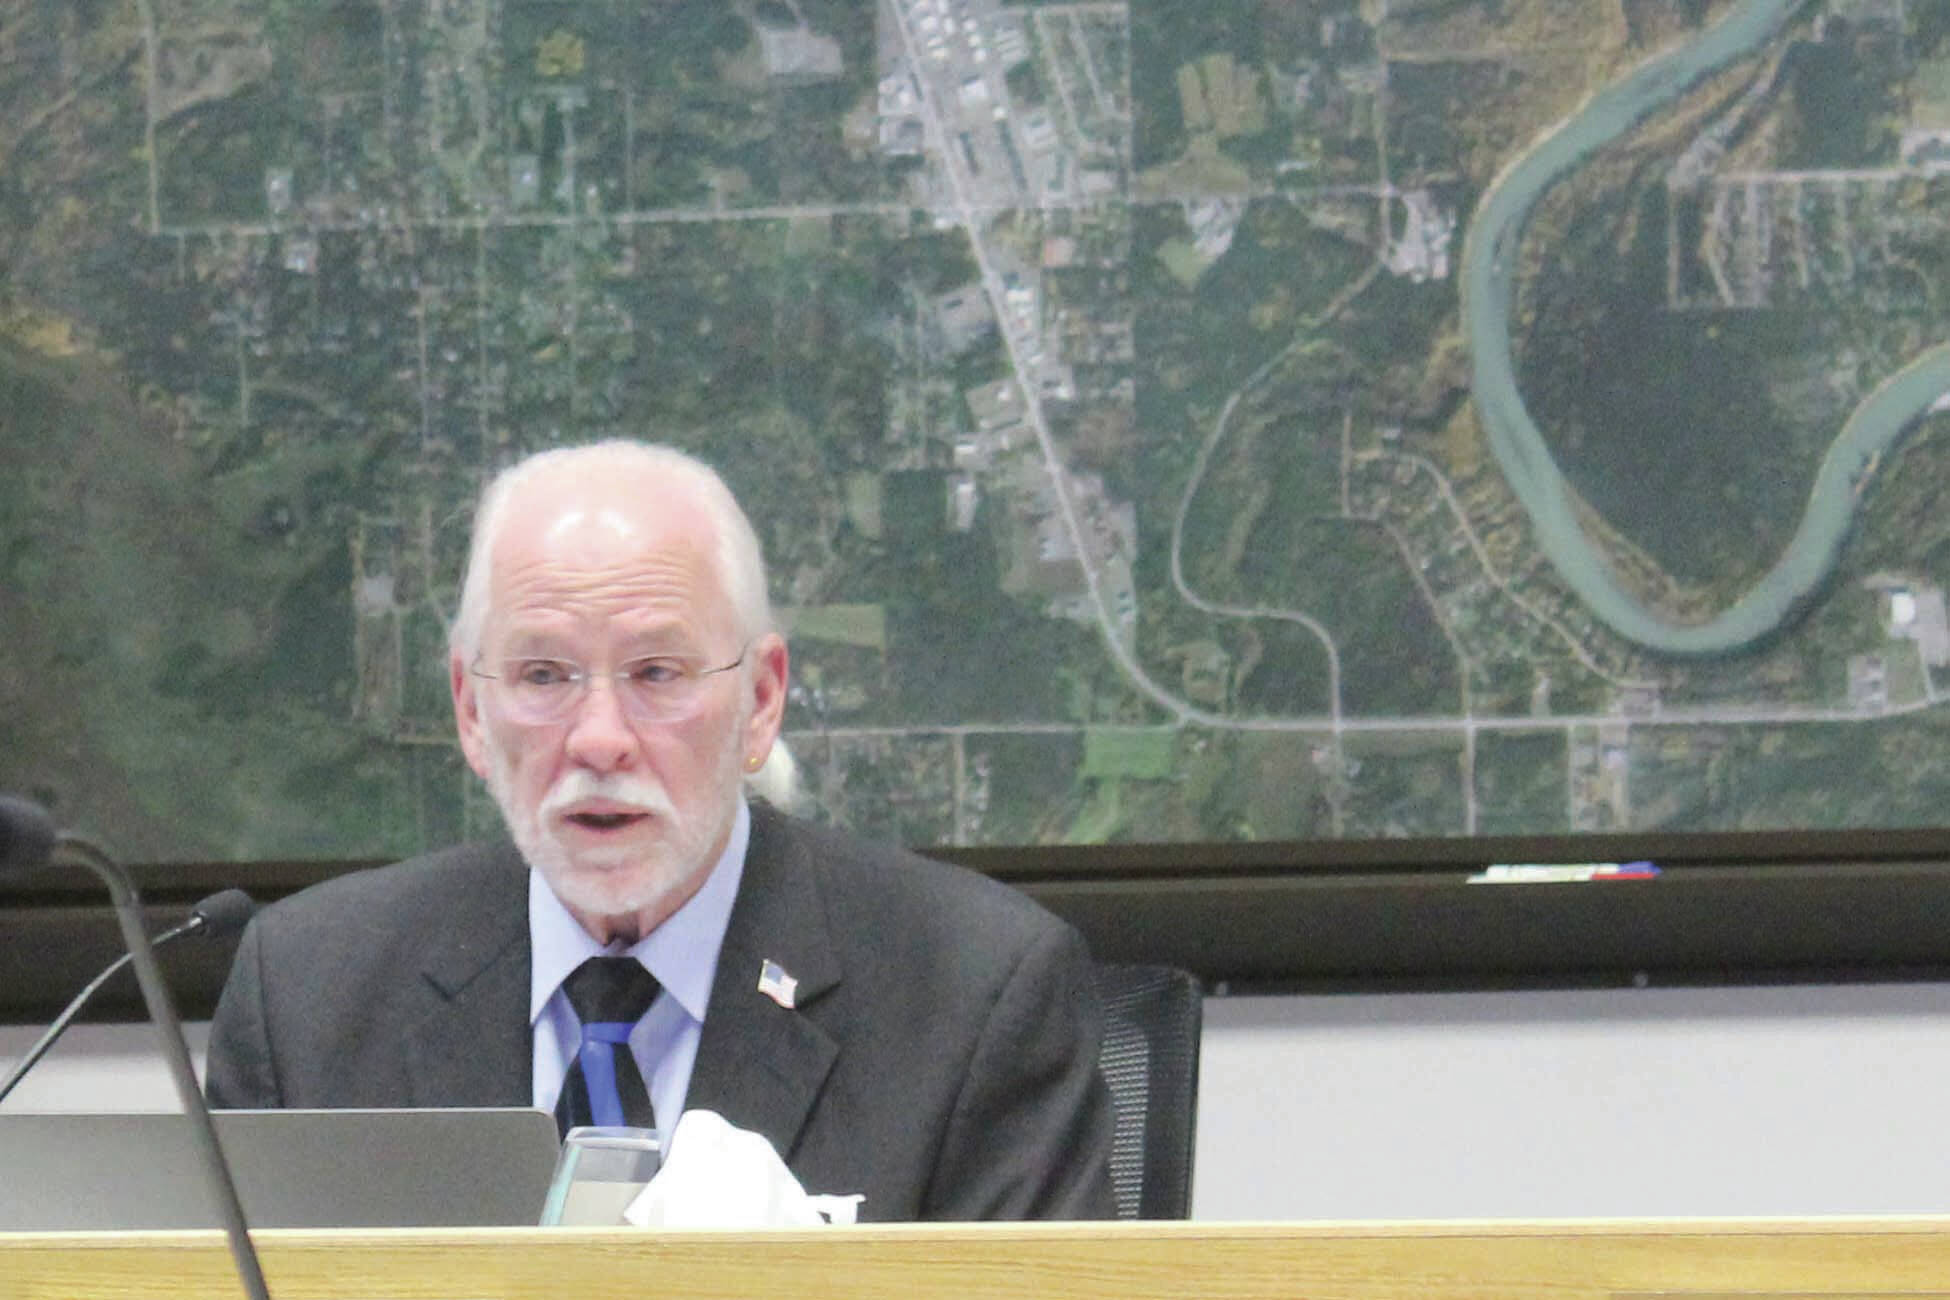 Soldotna Mayor Paul Whitney speaks during a meeting of the Soldotna City Council on Wednesday, Feb. 23, 2022, in Soldotna, Alaska. (Ashlyn O’Hara/Peninsula Clarion)